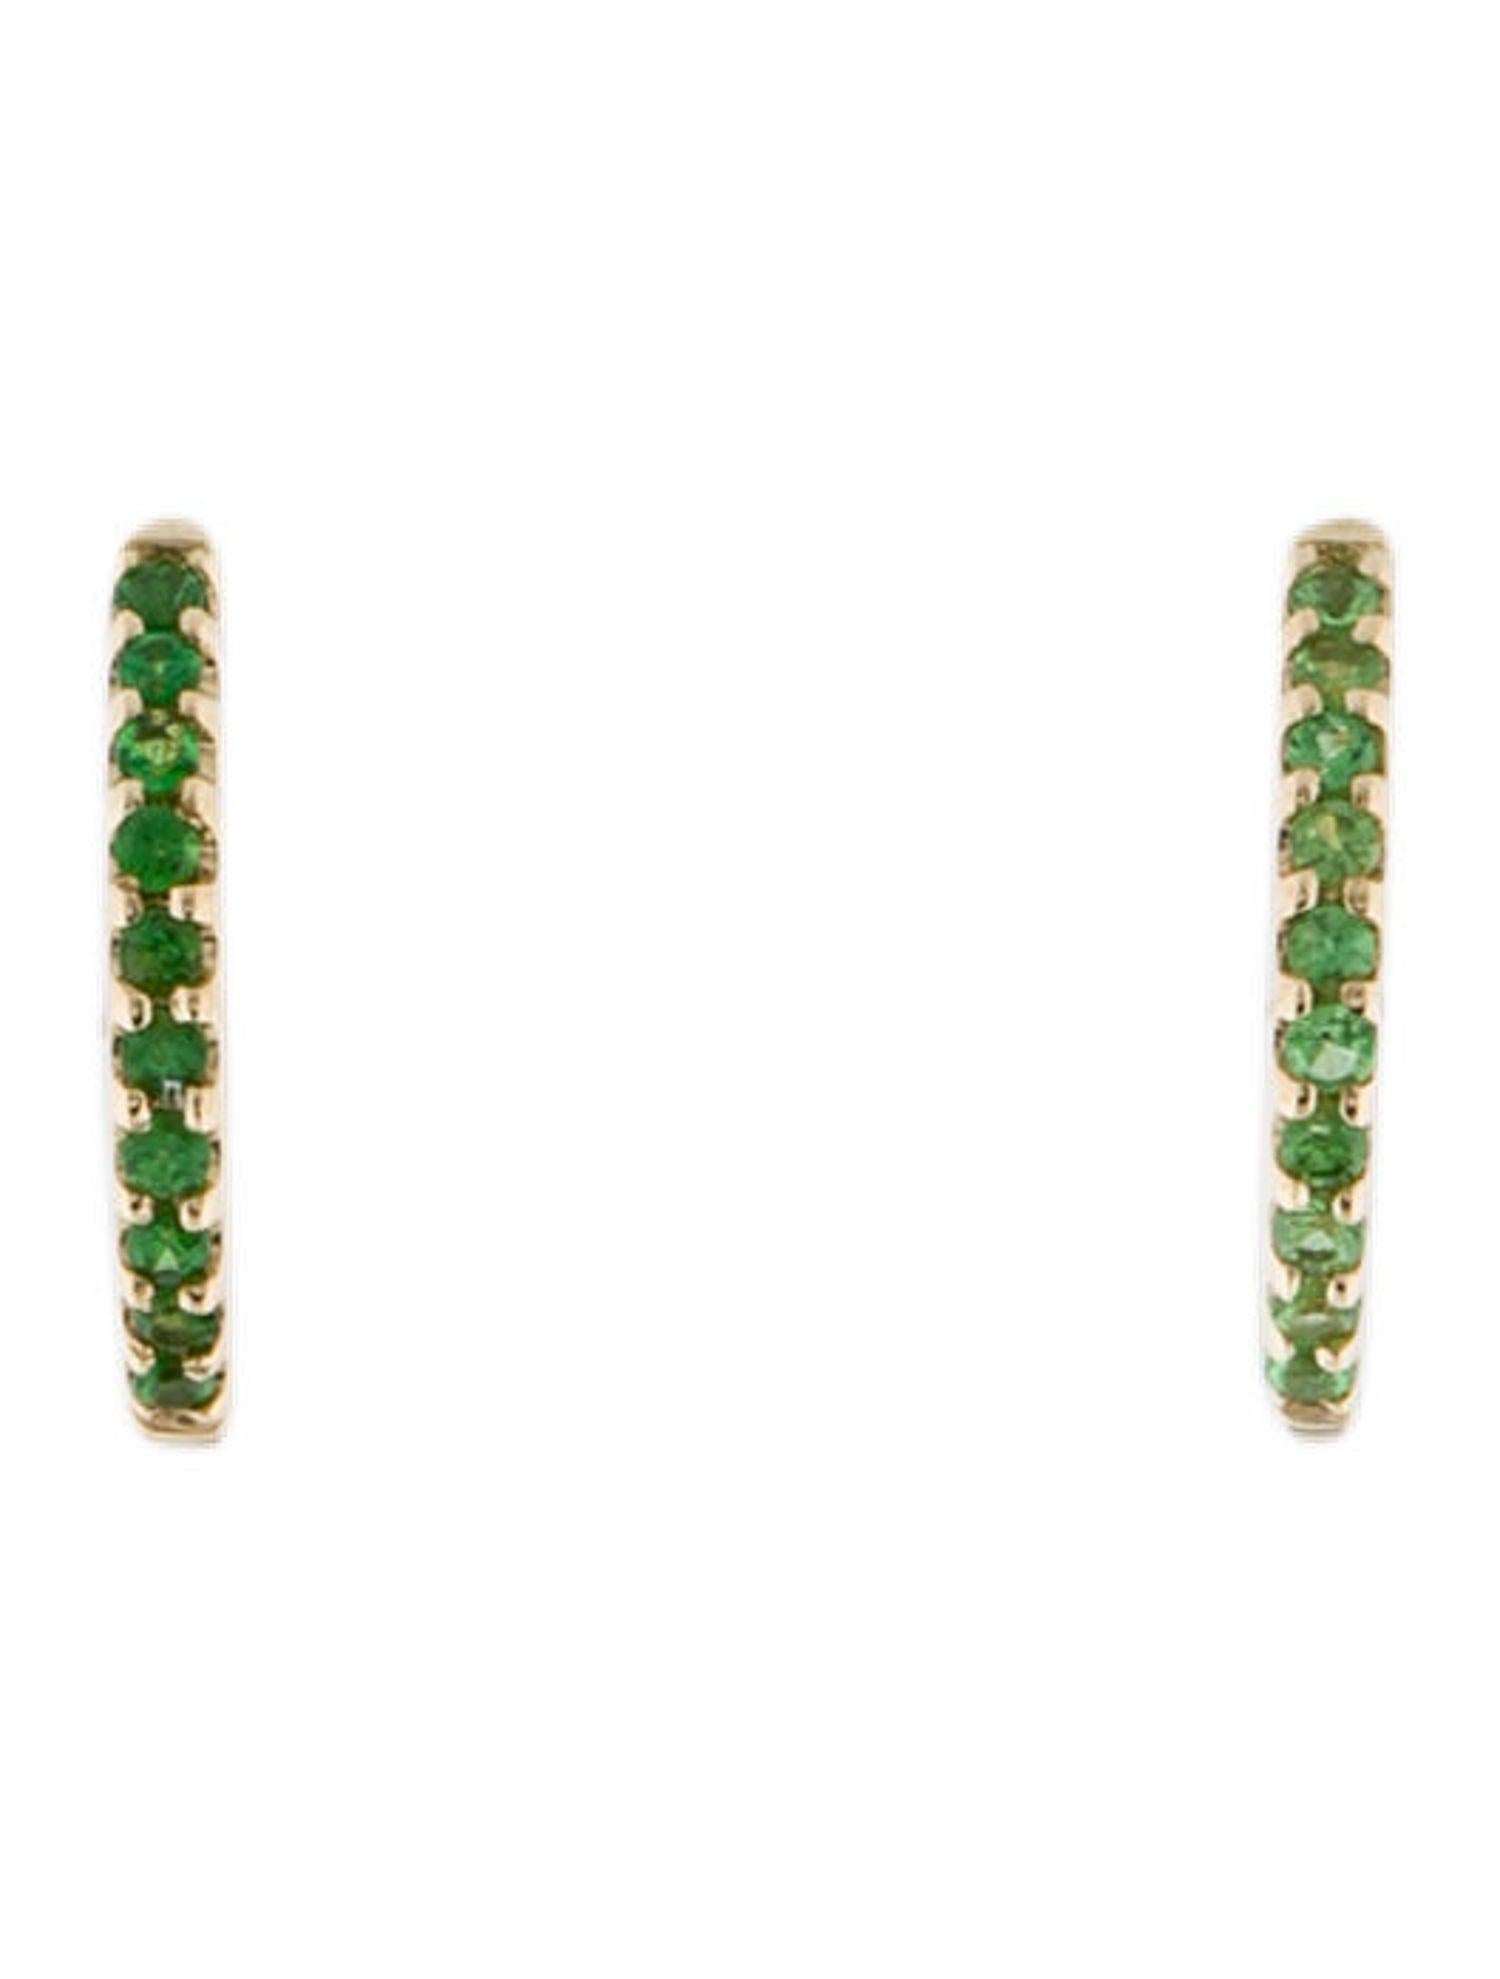 Contemporary 14K Yellow Gold 0.18 Carat Green Emerald Huggie Earrings